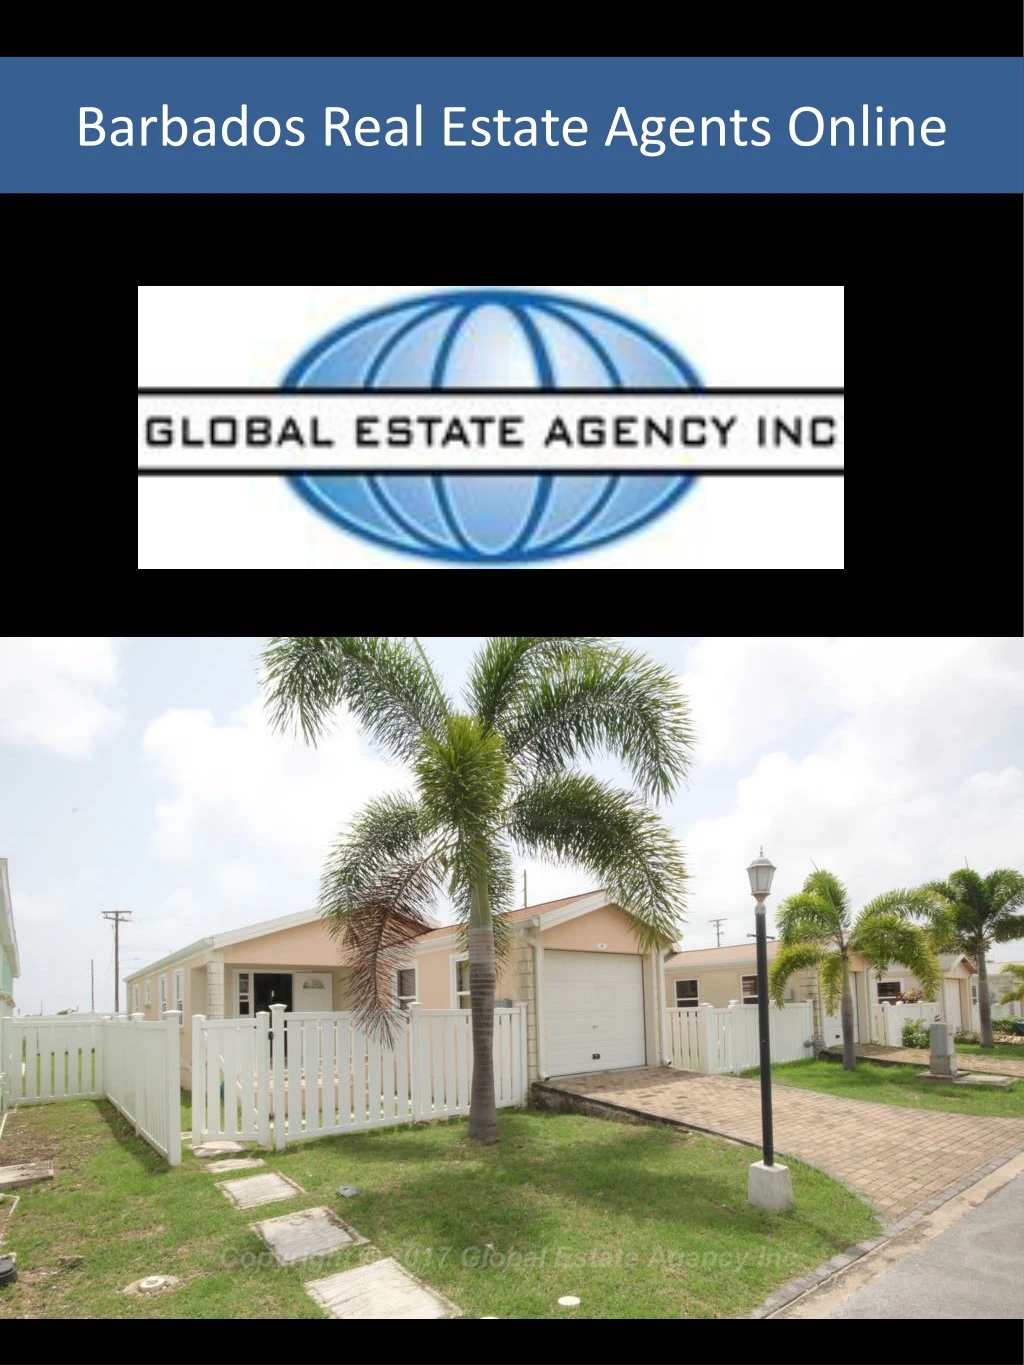 barbados real estate agents online